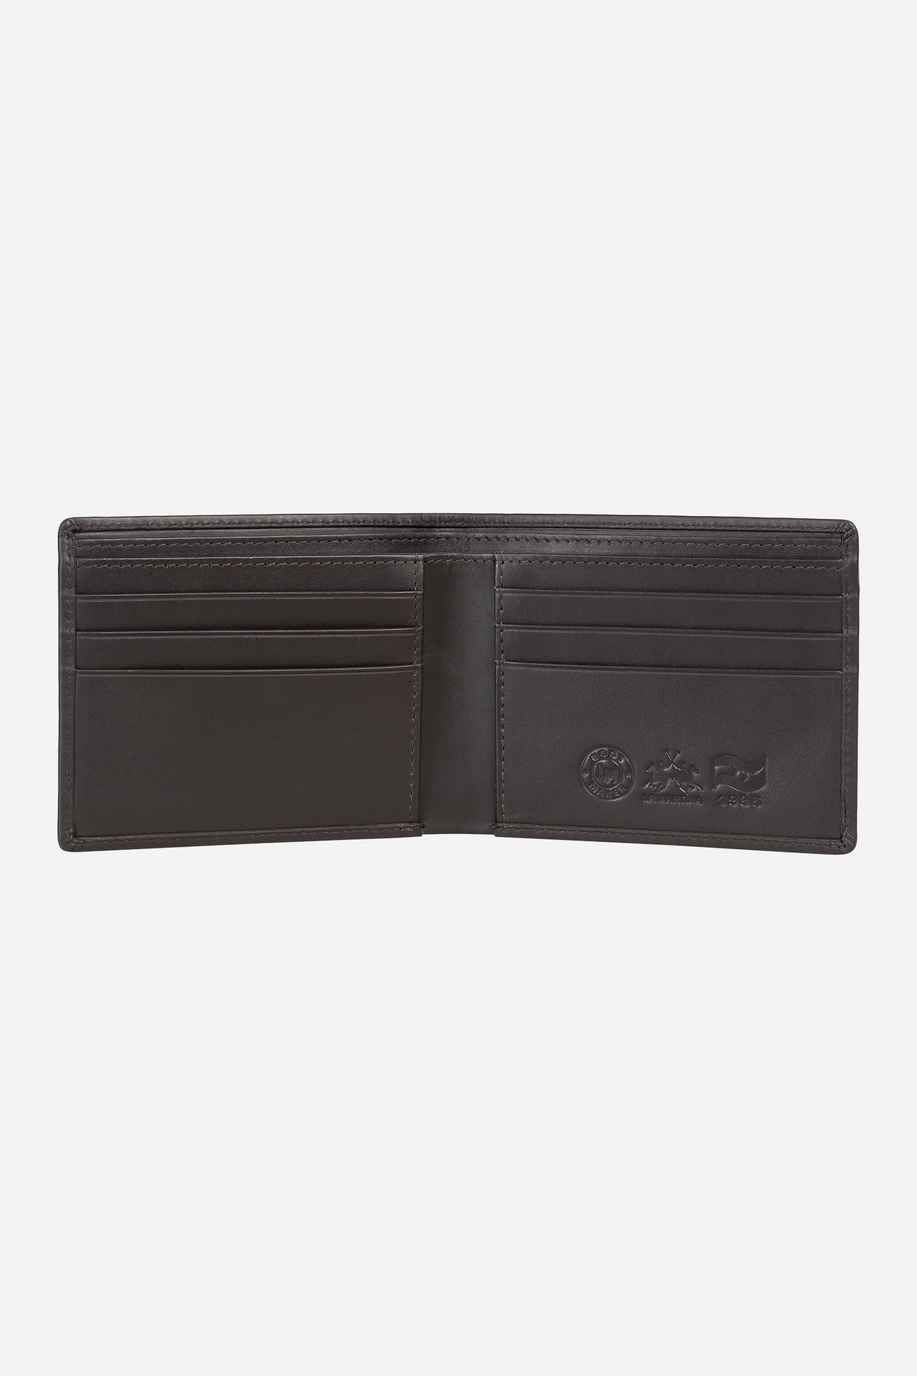 Leather wallet - test | La Martina - Official Online Shop